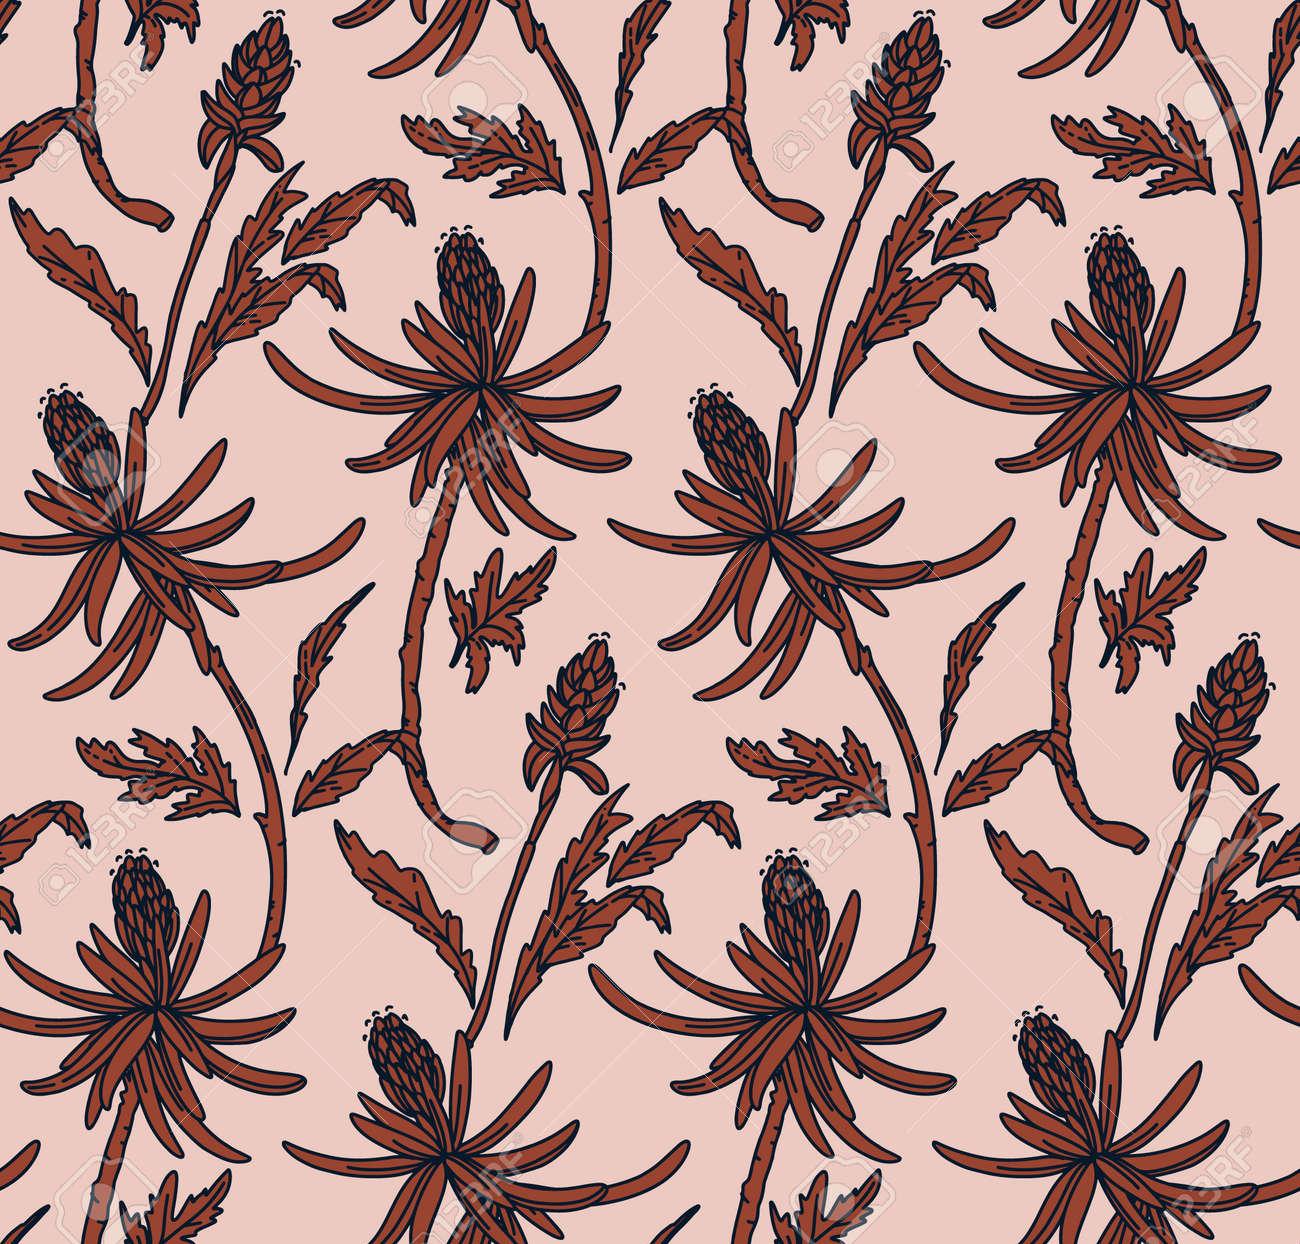 Floral Botanical Line Art Seamless PatternRetro Nature Wallpaper